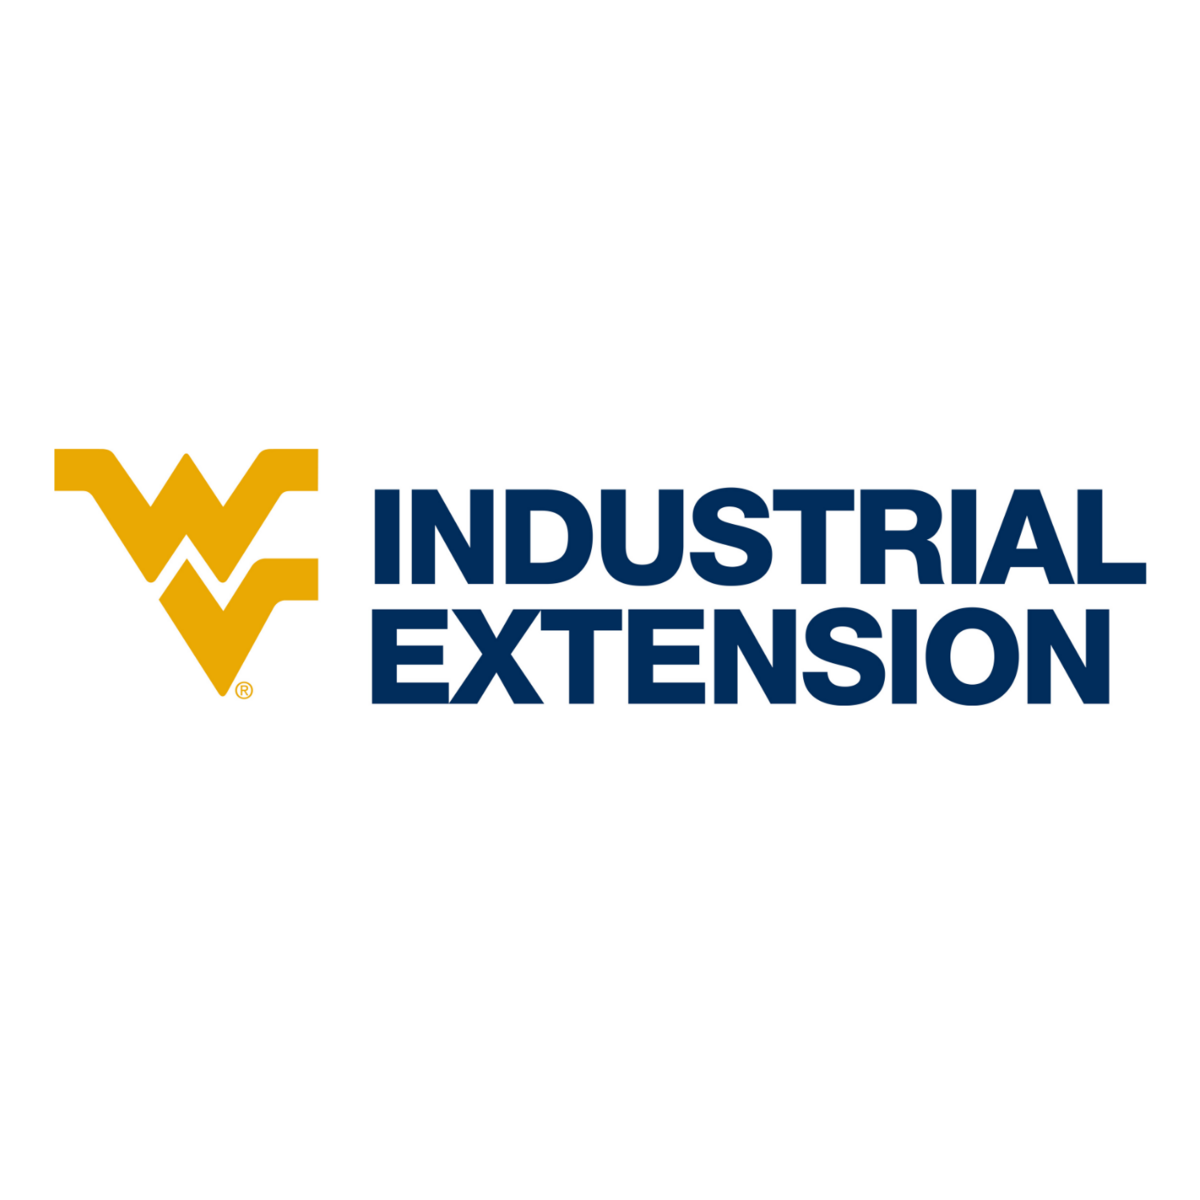 WVU Industrial Extension